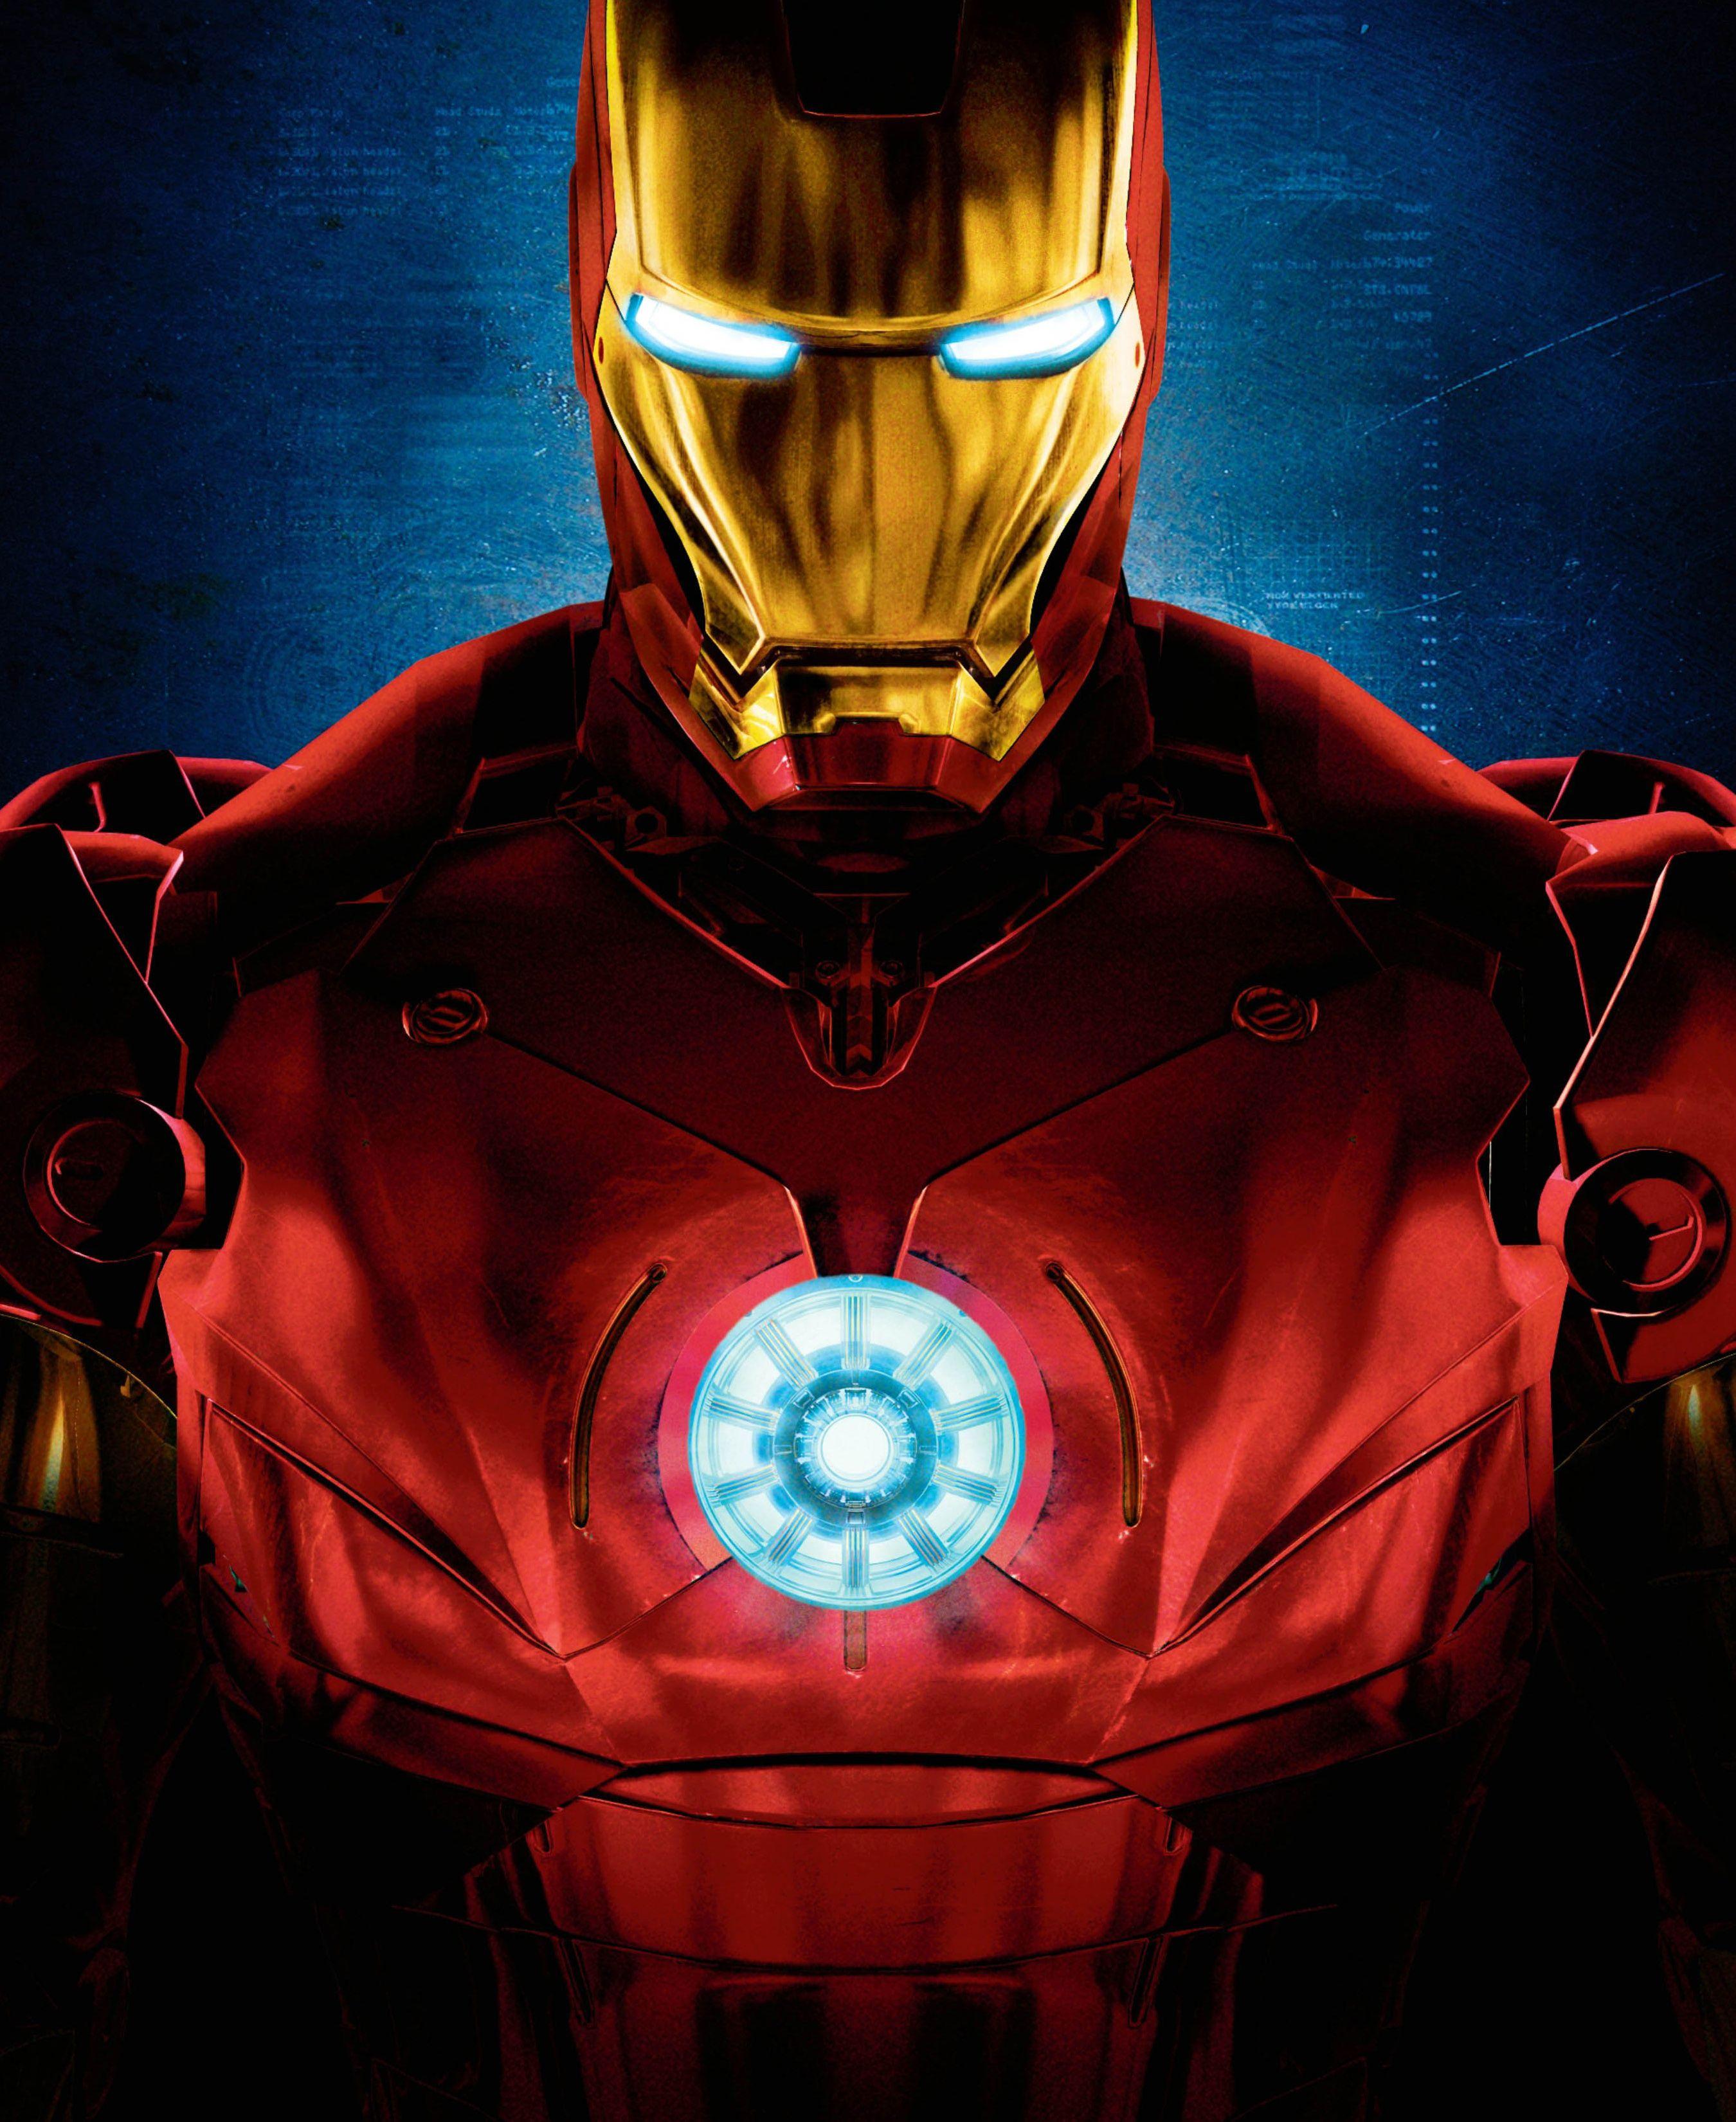 ironman. Iron man wallpaper, Iron